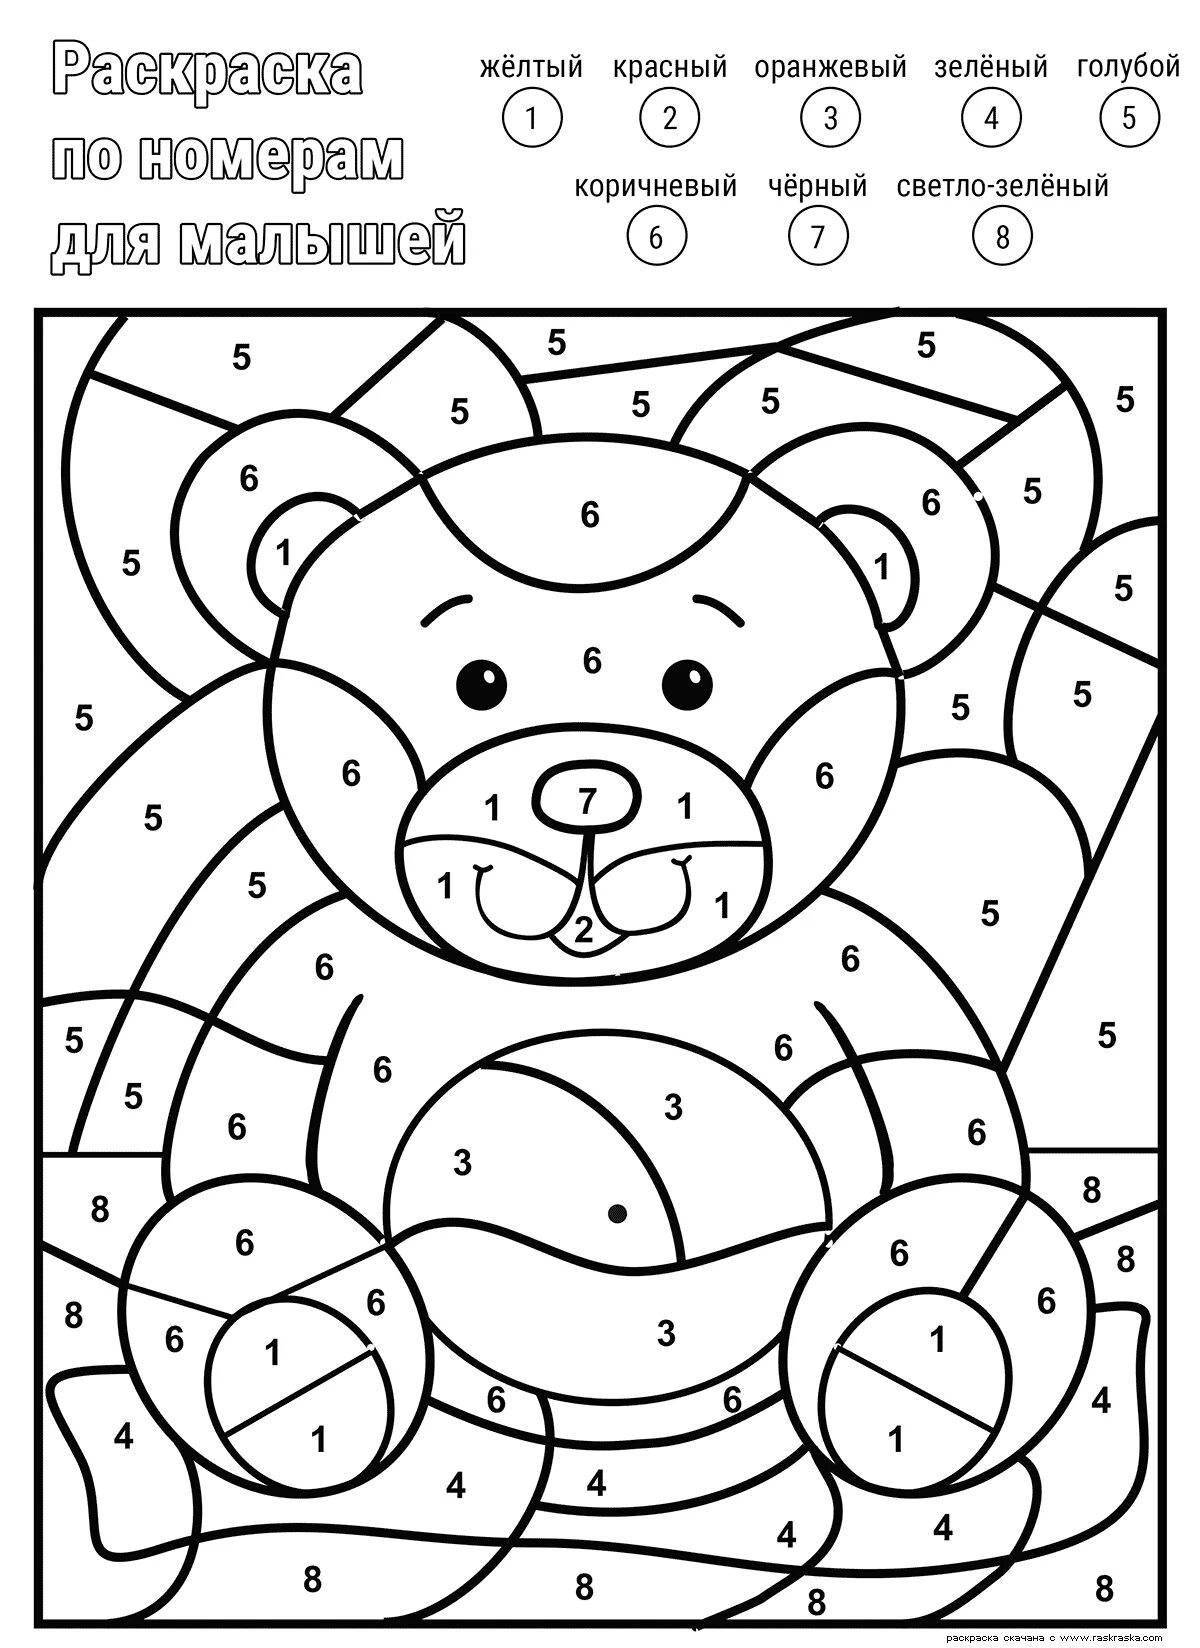 Color-joful coloring page digital для детей 6-7 лет